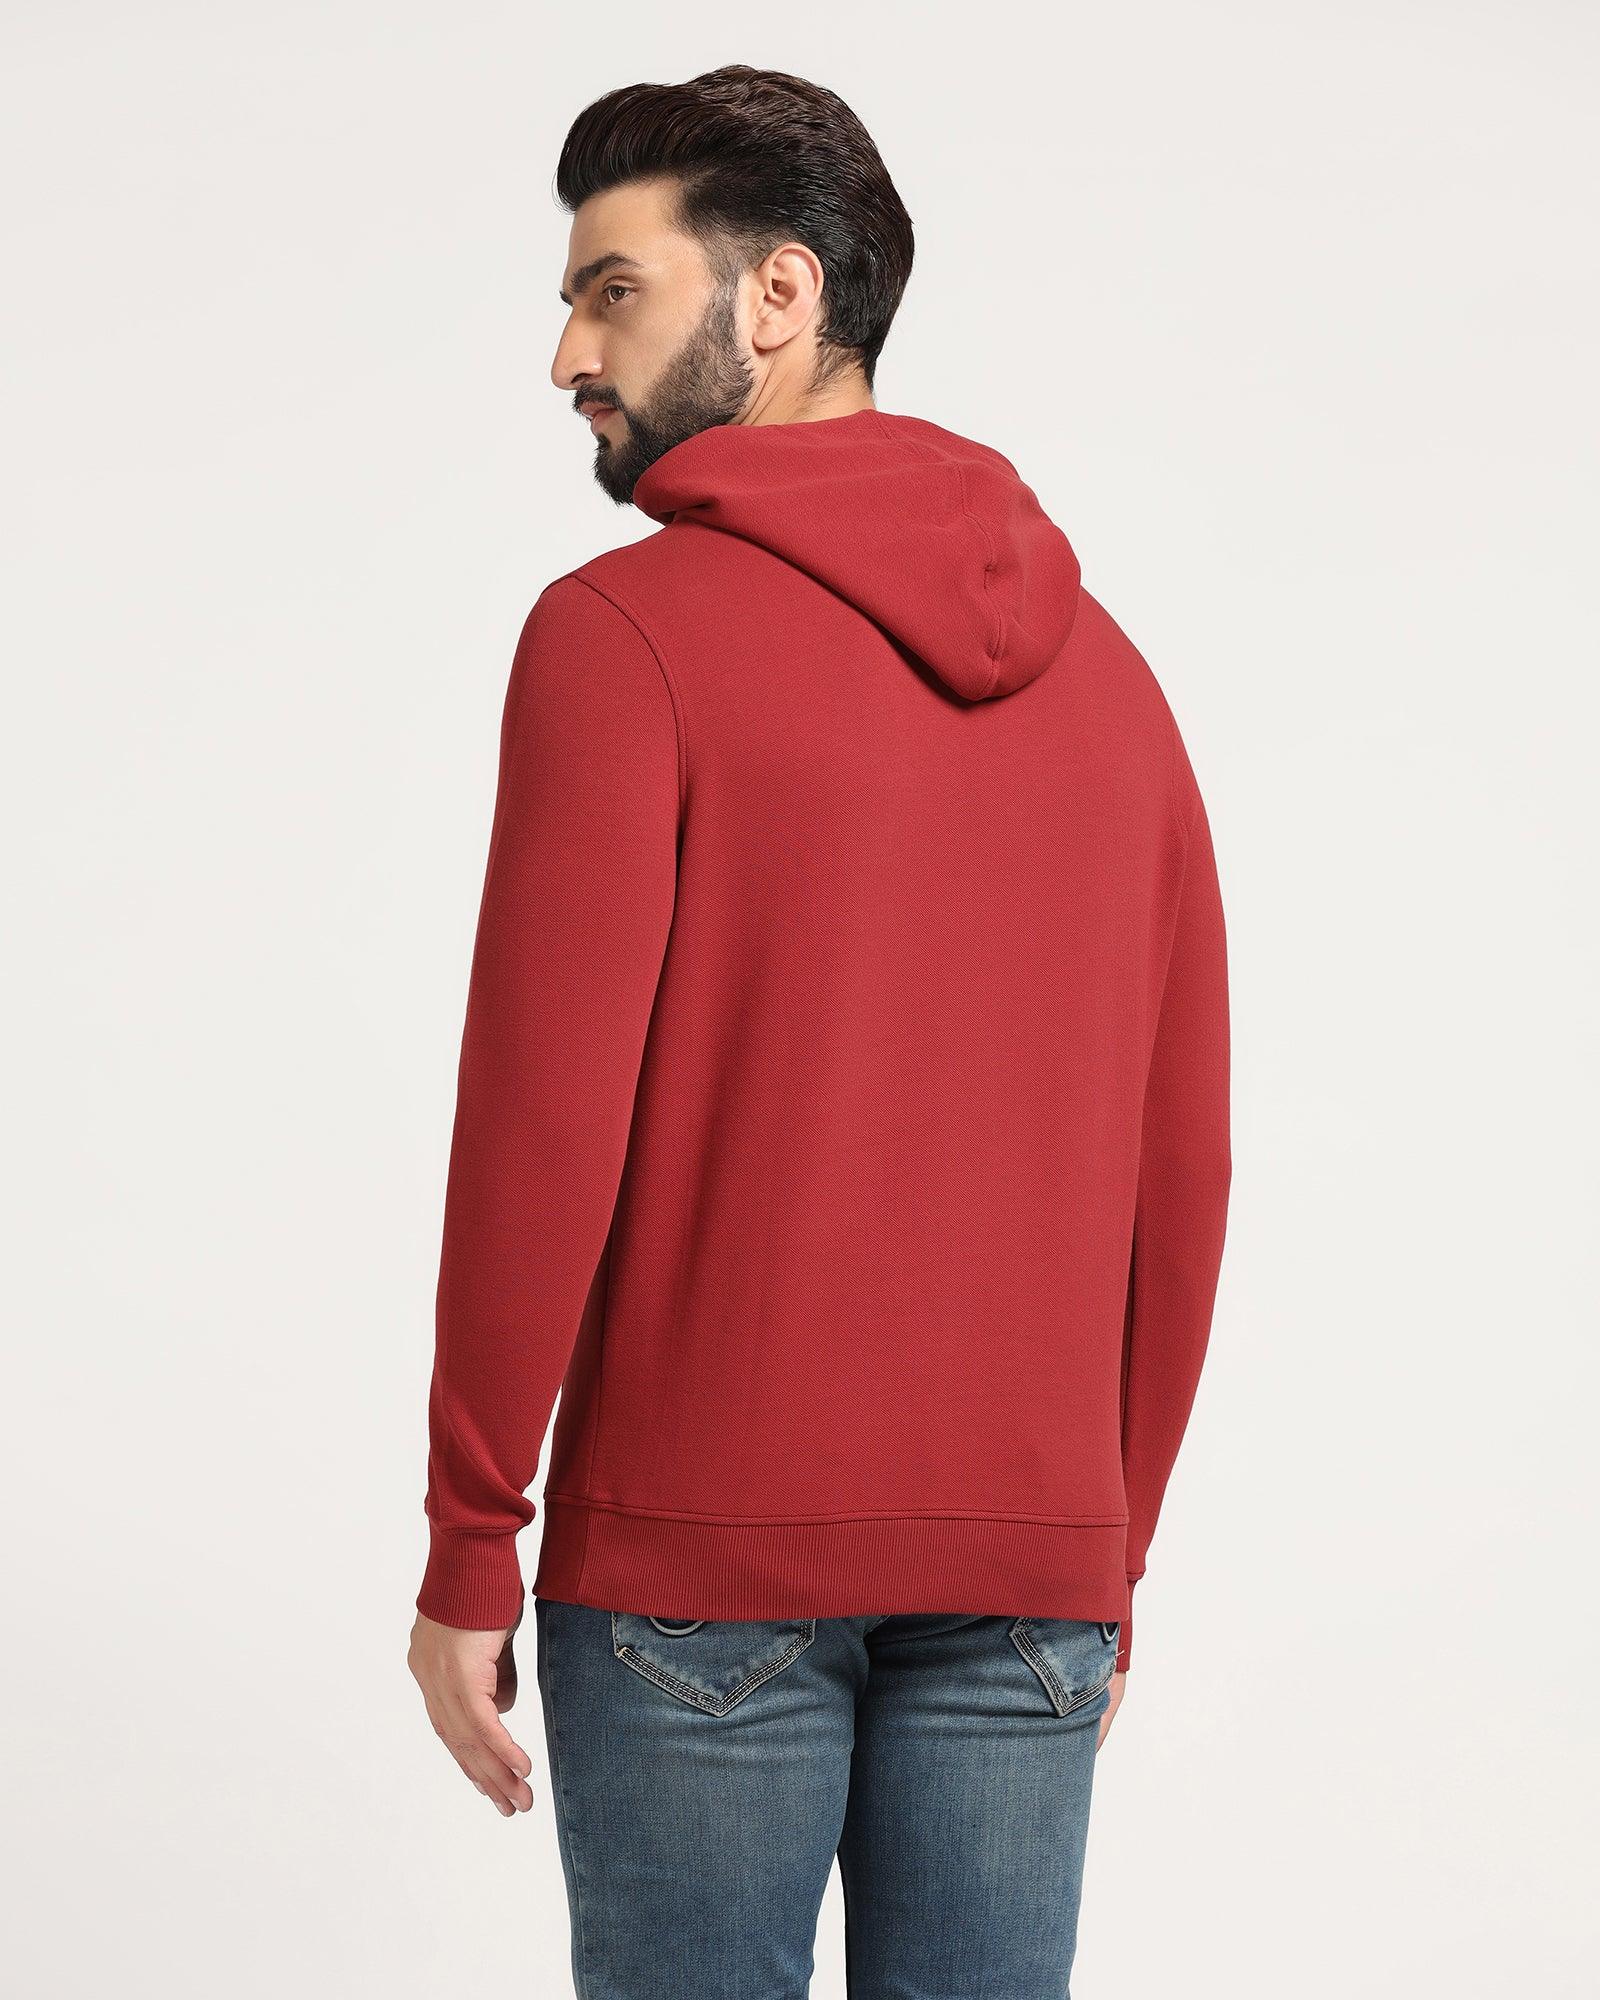 Buy Men Red Hooded Neck Full Sleeves Casual Sweatshirt Online - 652258 |  Allen Solly